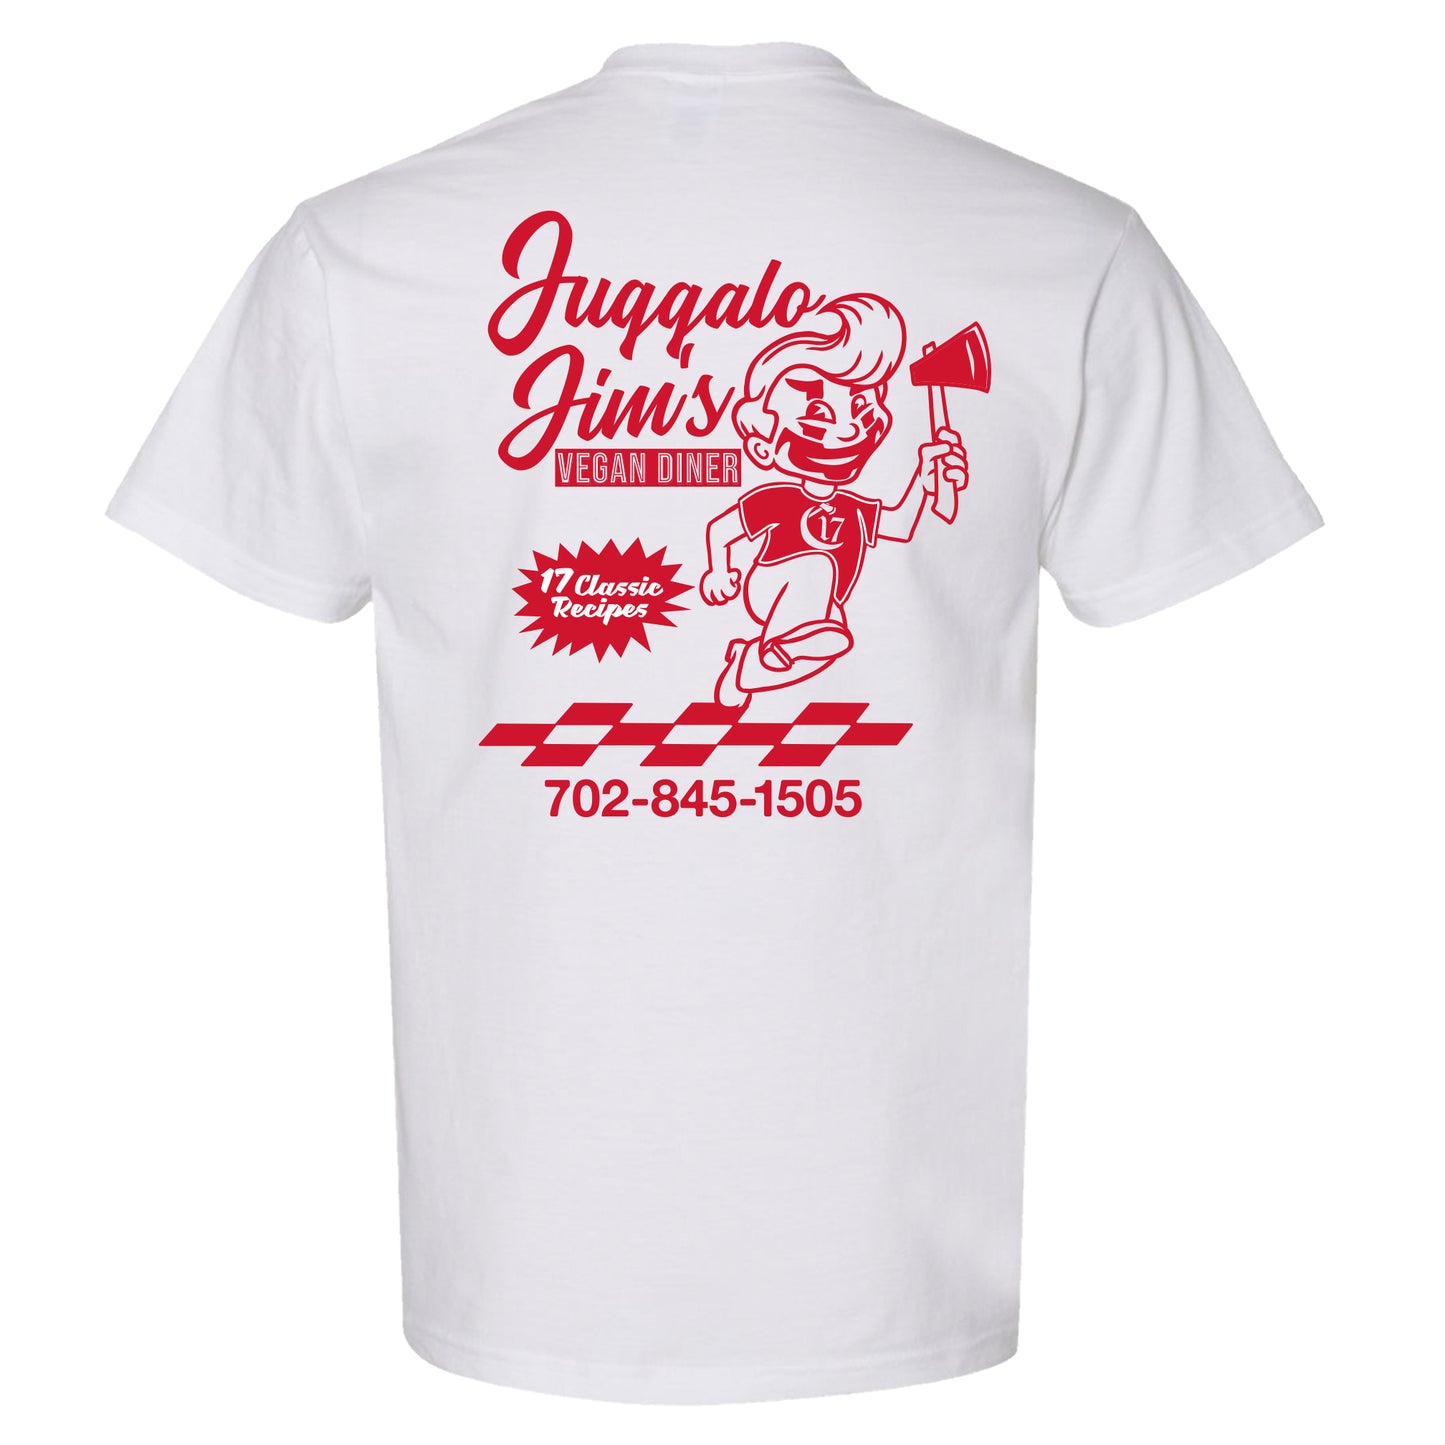 Juggalo Jim's Vegan Diner - Short sleeve - White